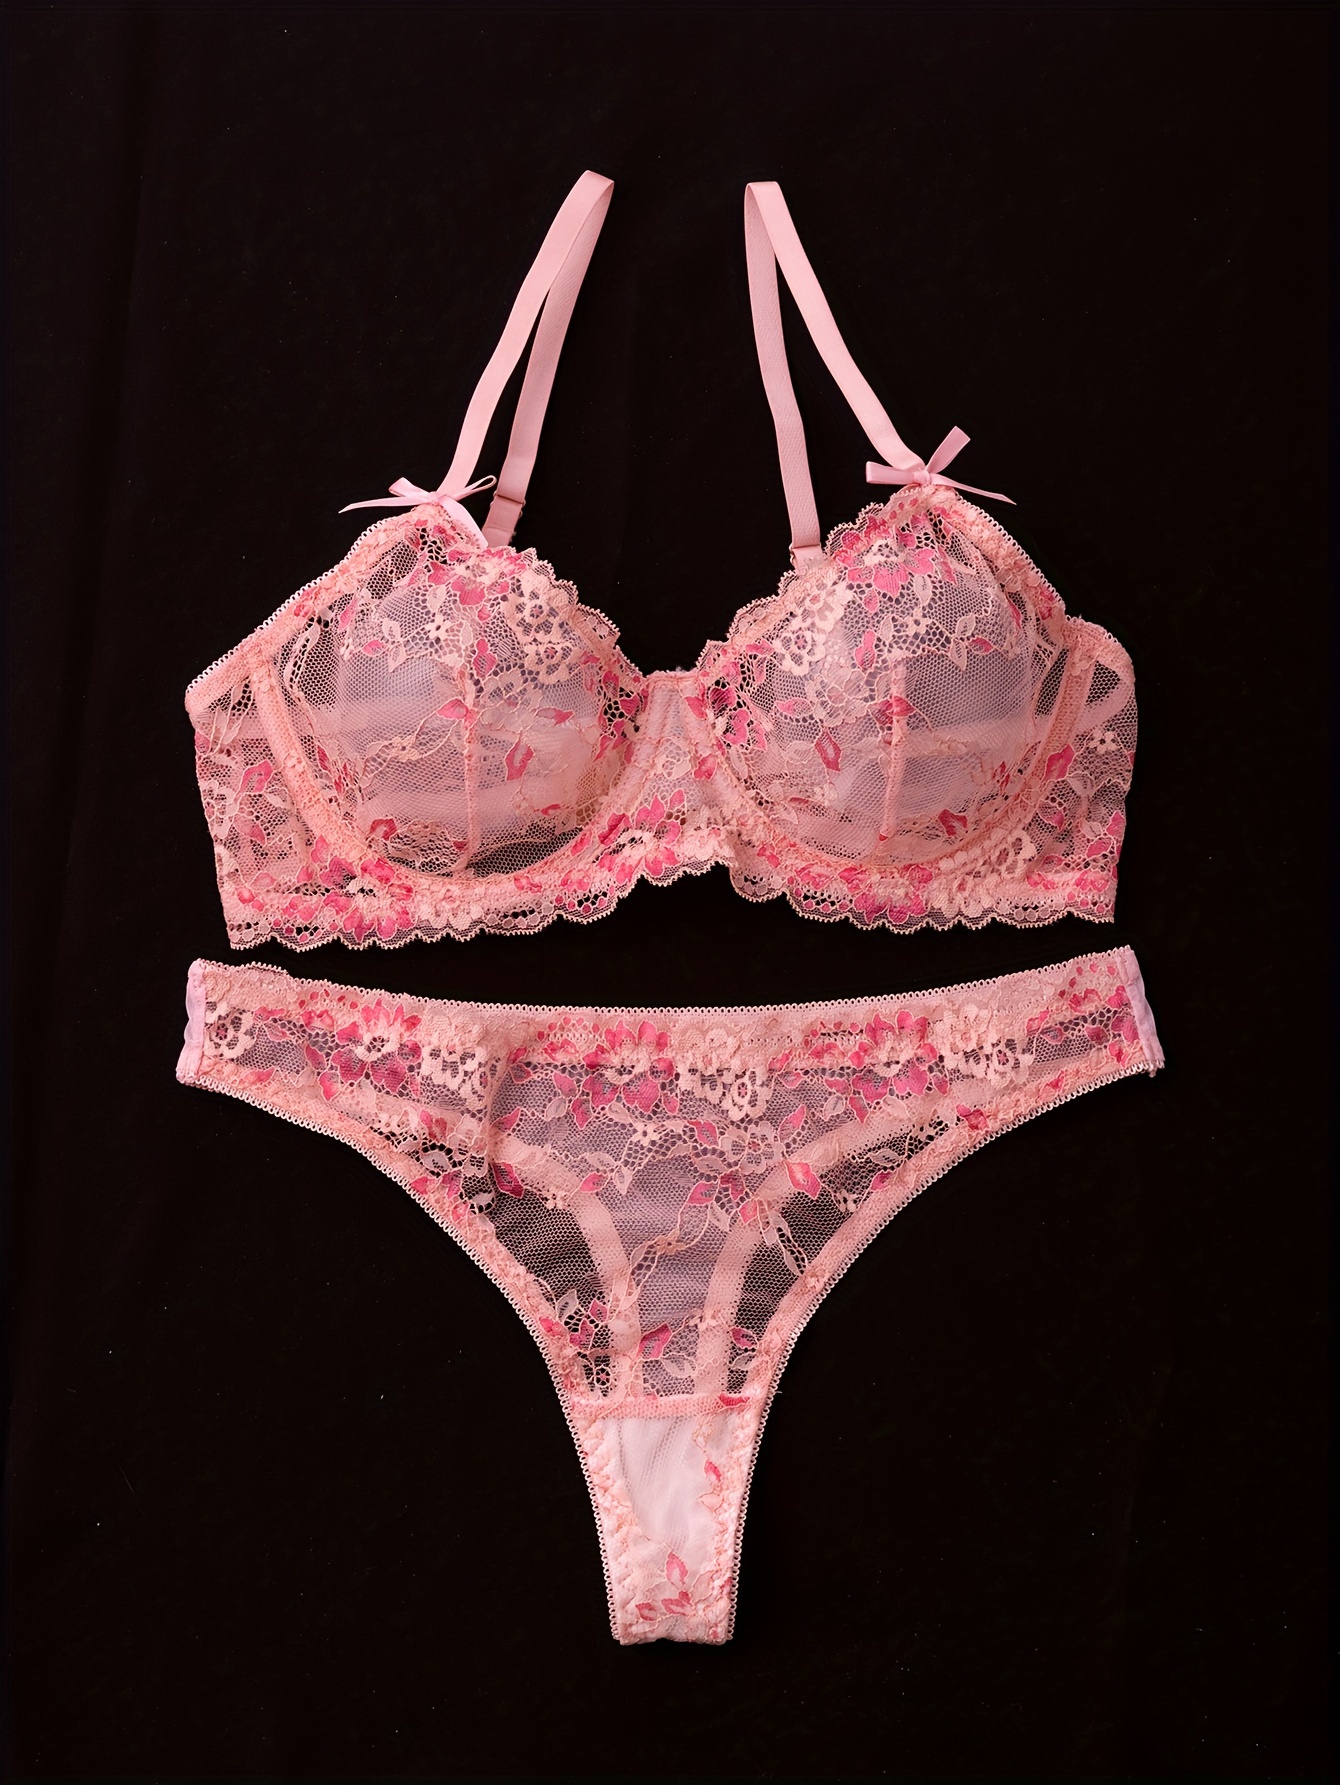 Lingerie For Women Pink Lace Bra Set Transparent Fancy Underwear 2